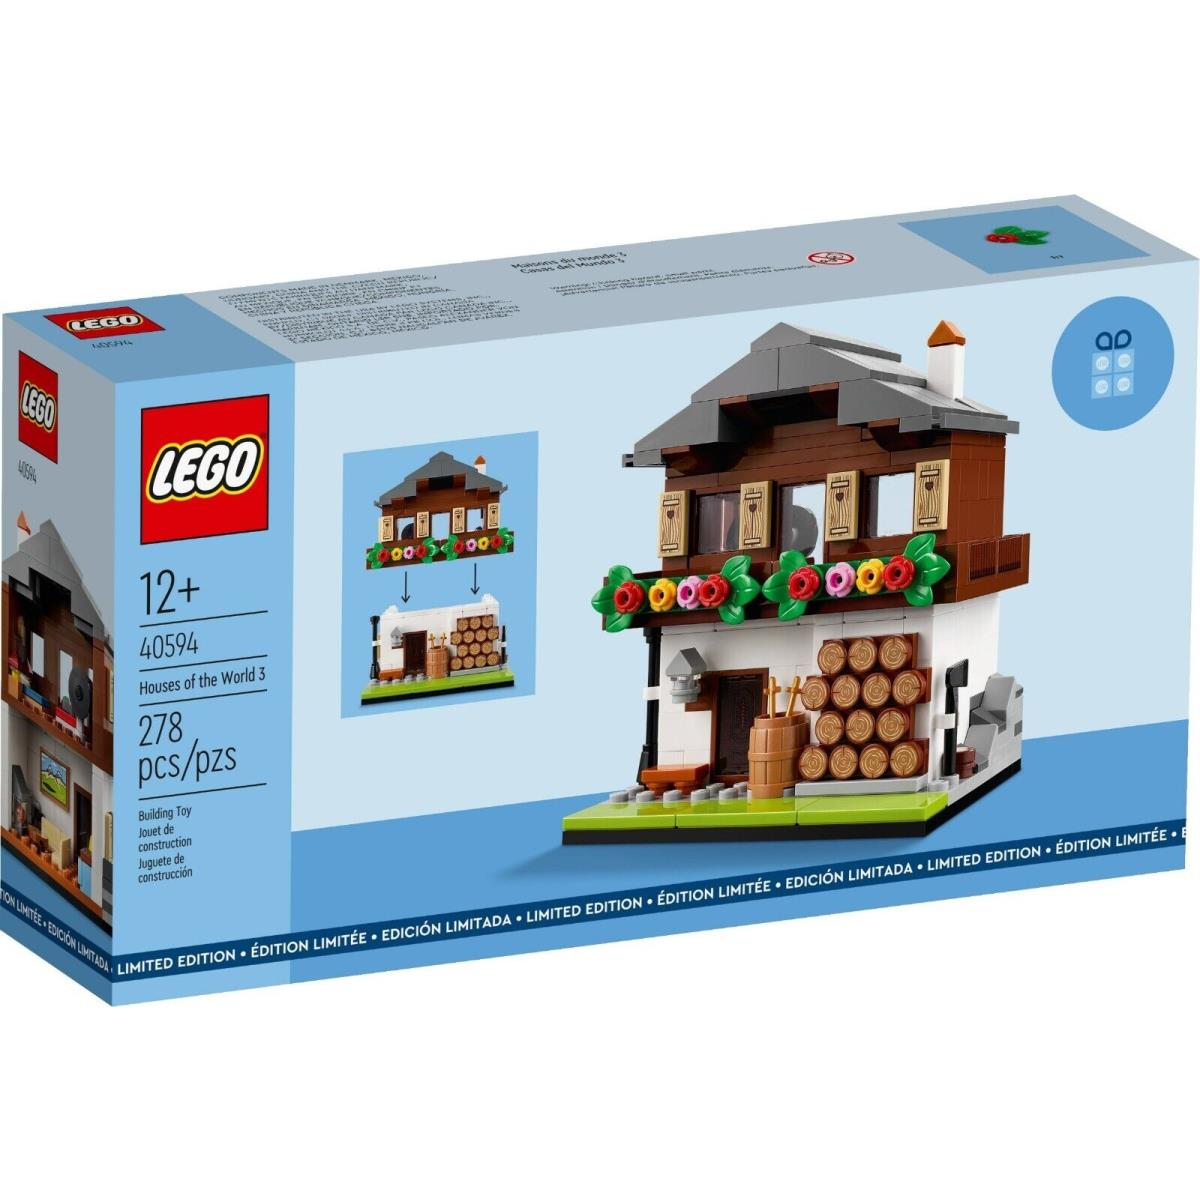 Lego Promotional Set: Houses of The World 3 40594